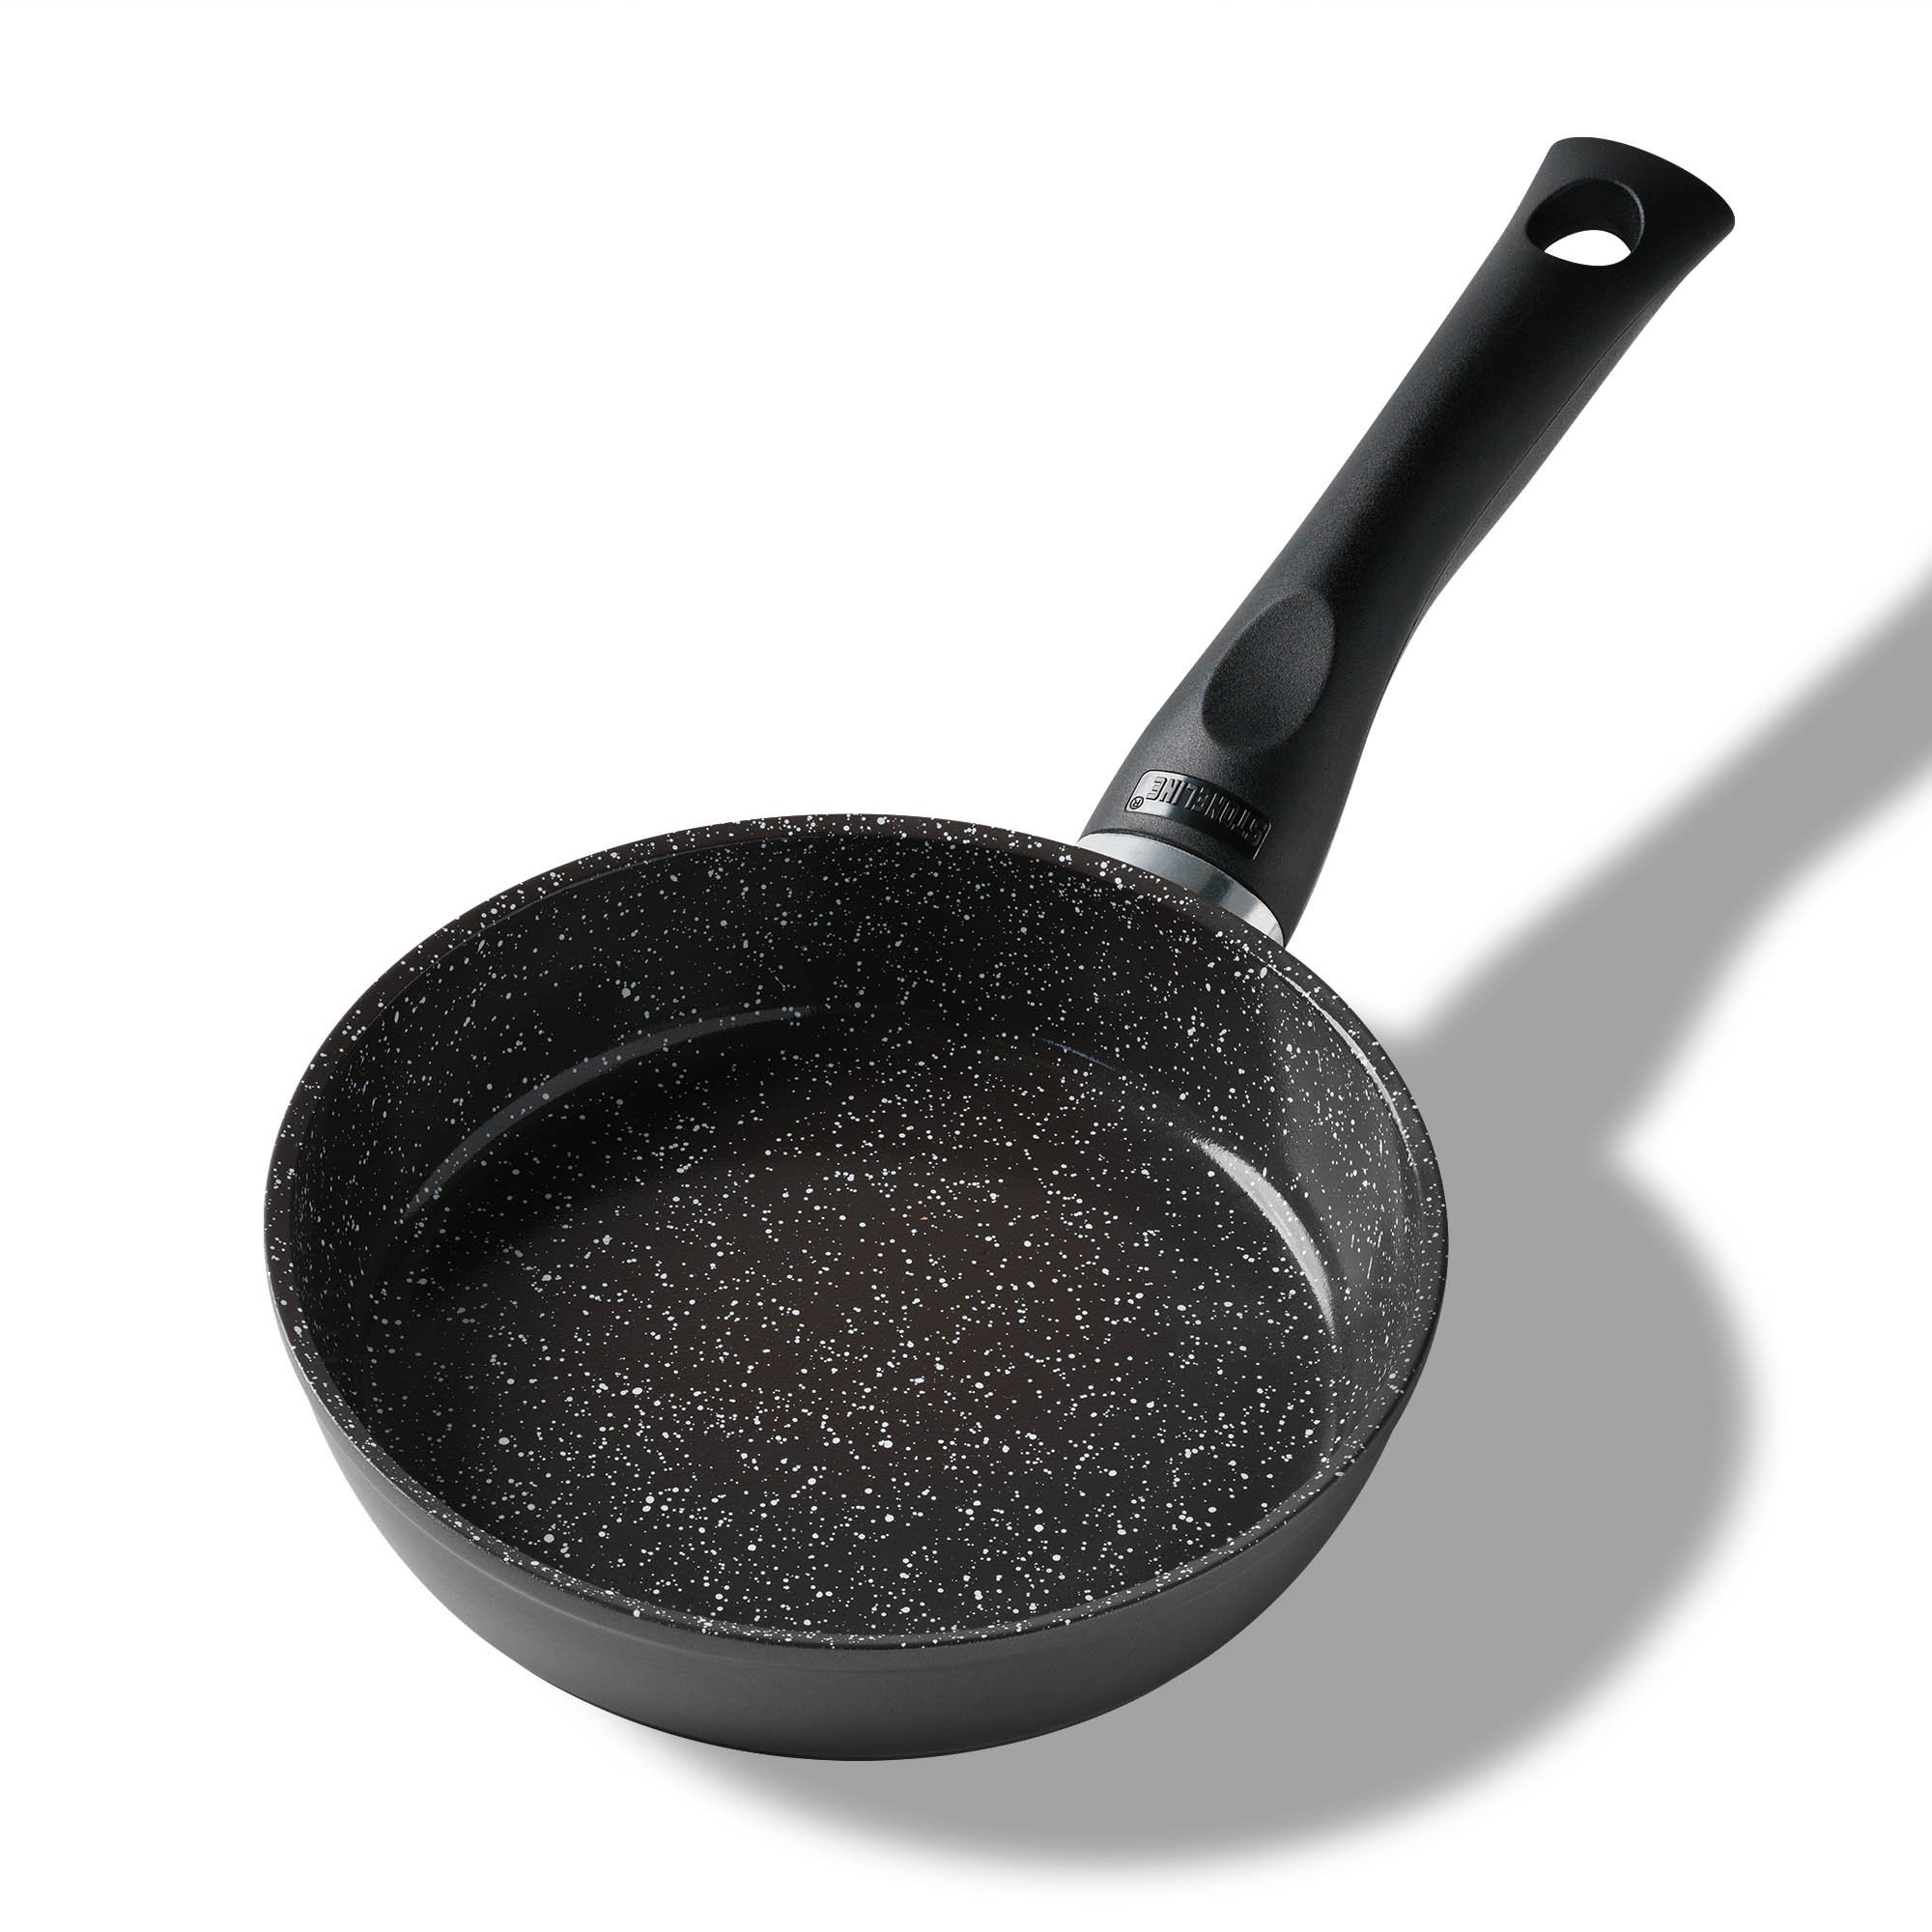 STONELINE® CERAMIC Frying Pan 16 cm, Non-Stick Pan | CERAMIC Cookware